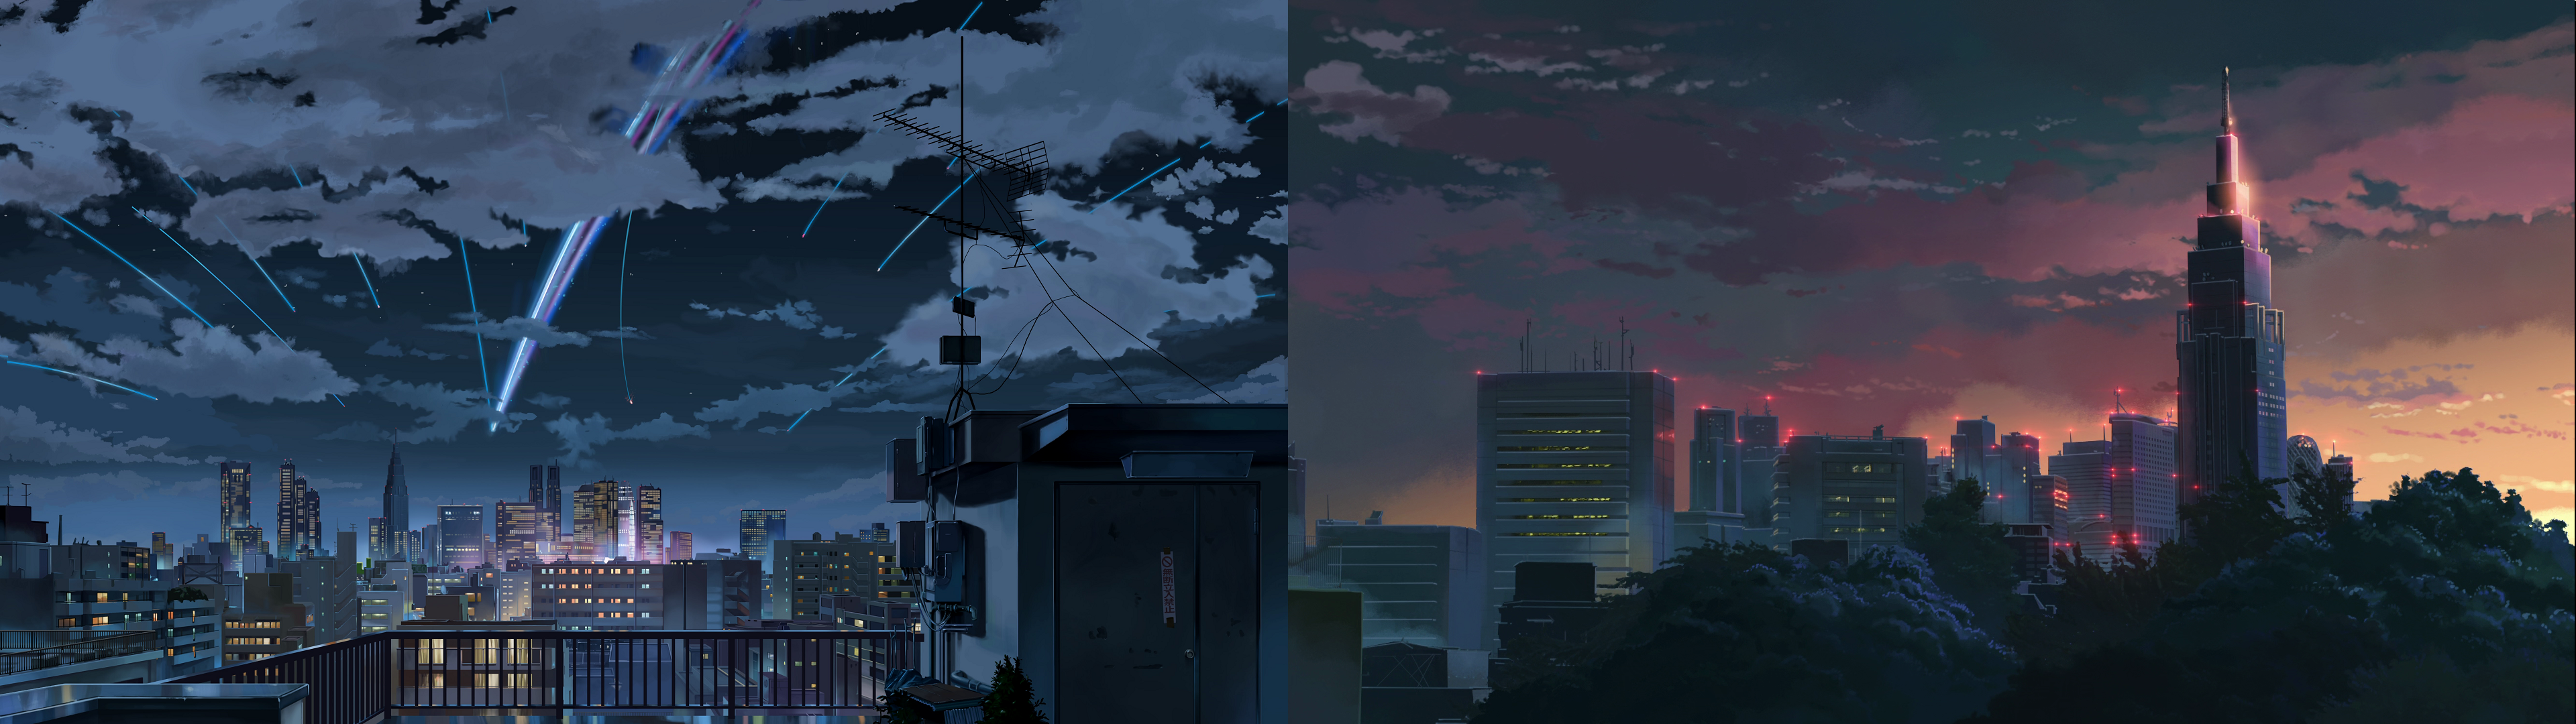 Kimi No Na Wa Anime Dual Monitors The Garden Of Words Makoto Shinkai Cityscape 3840x1080